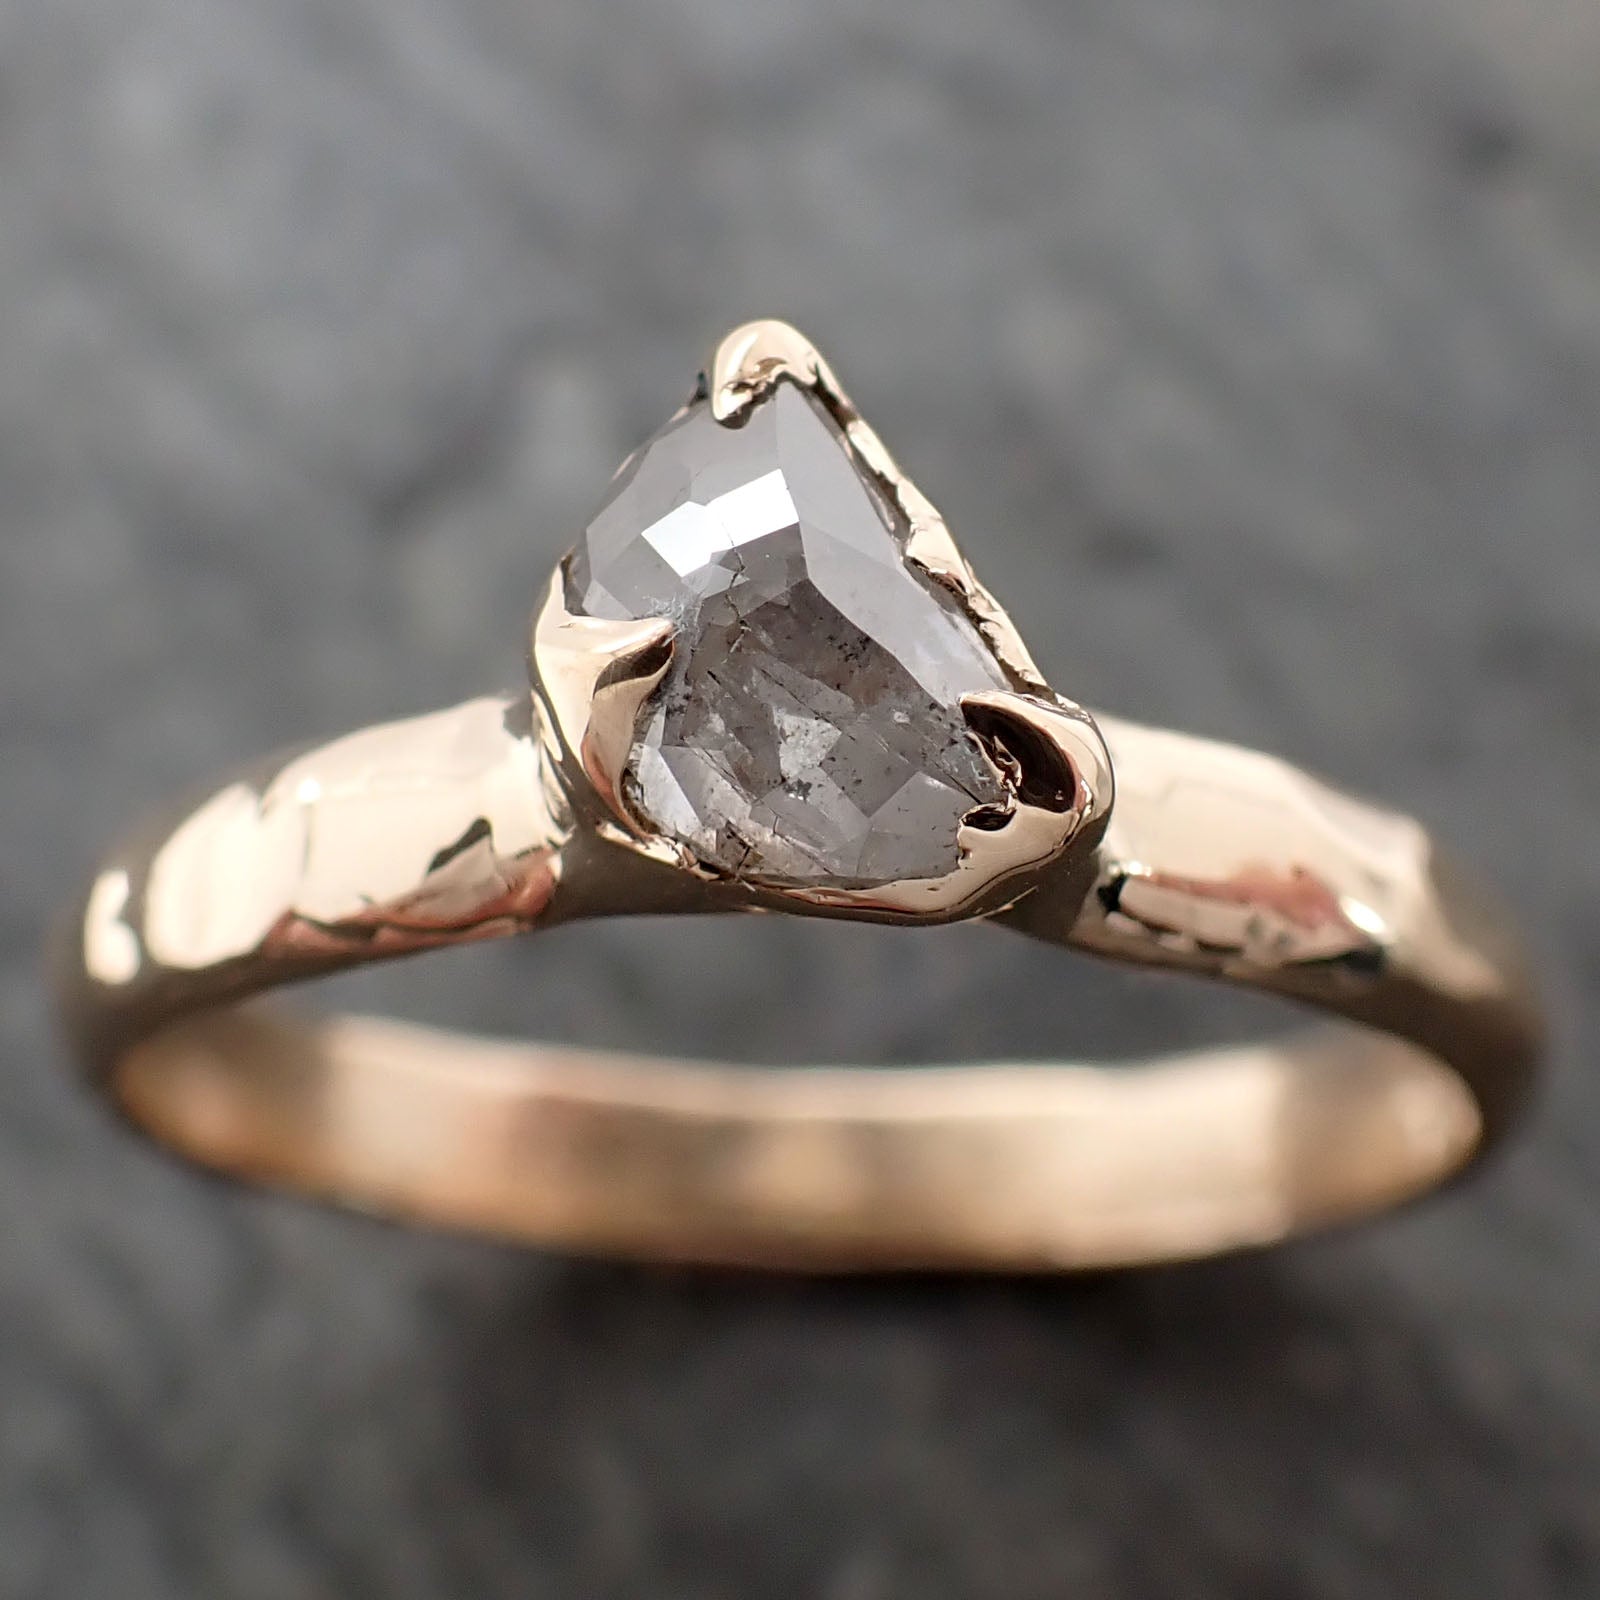 Fancy cut White half moon Diamond Engagement 14k Yellow Gold Solitaire Wedding Ring byAngeline 2859